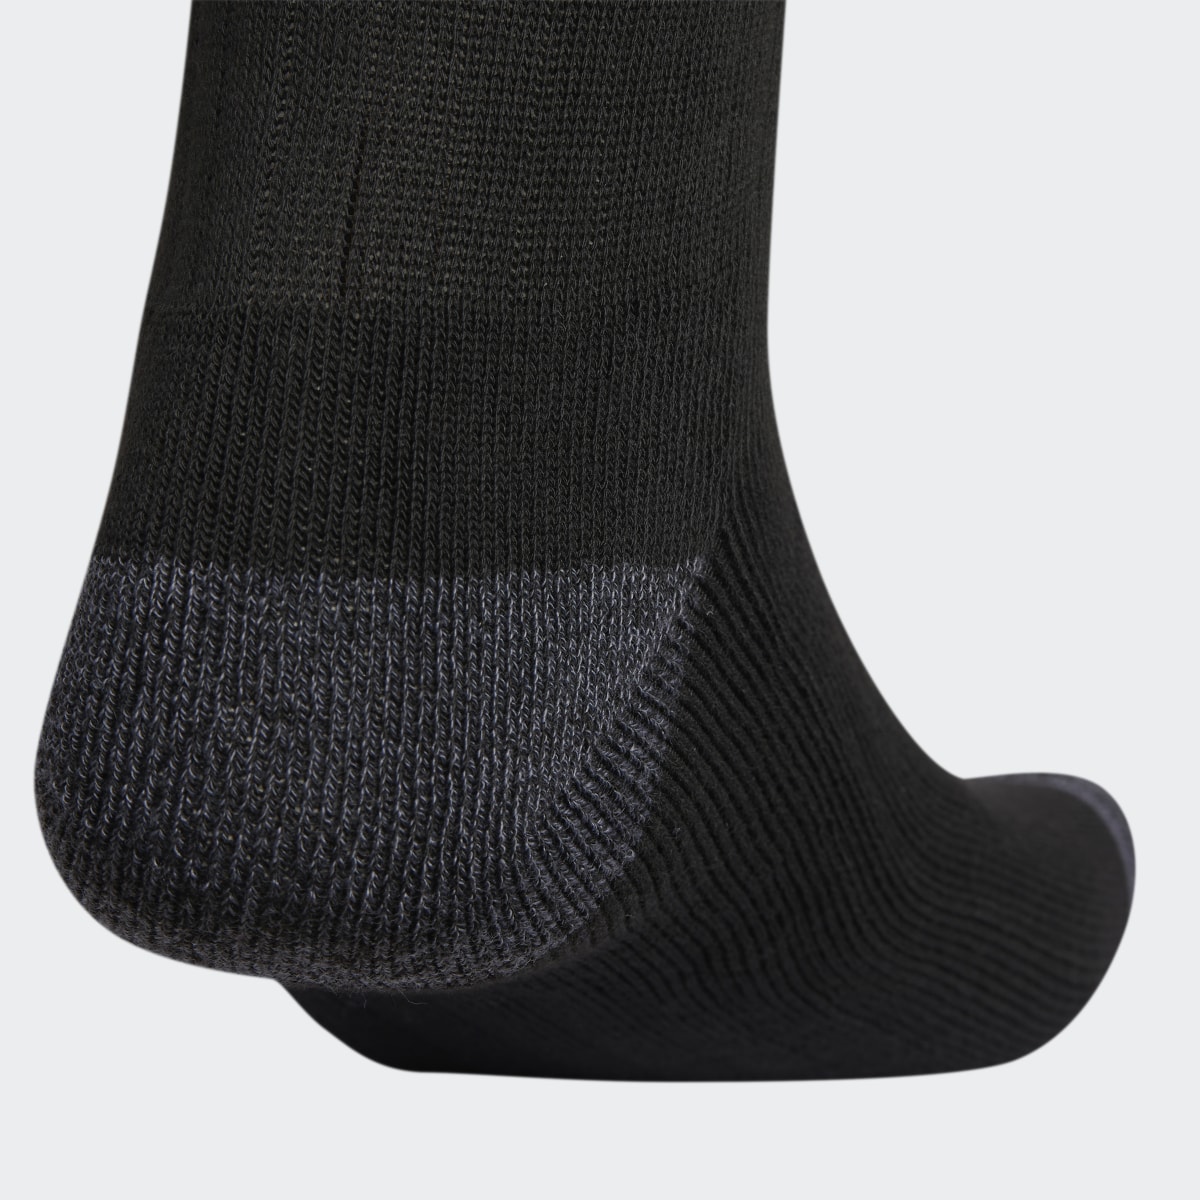 Adidas Classic Cushioned Crew Socks 3 Pairs. 5